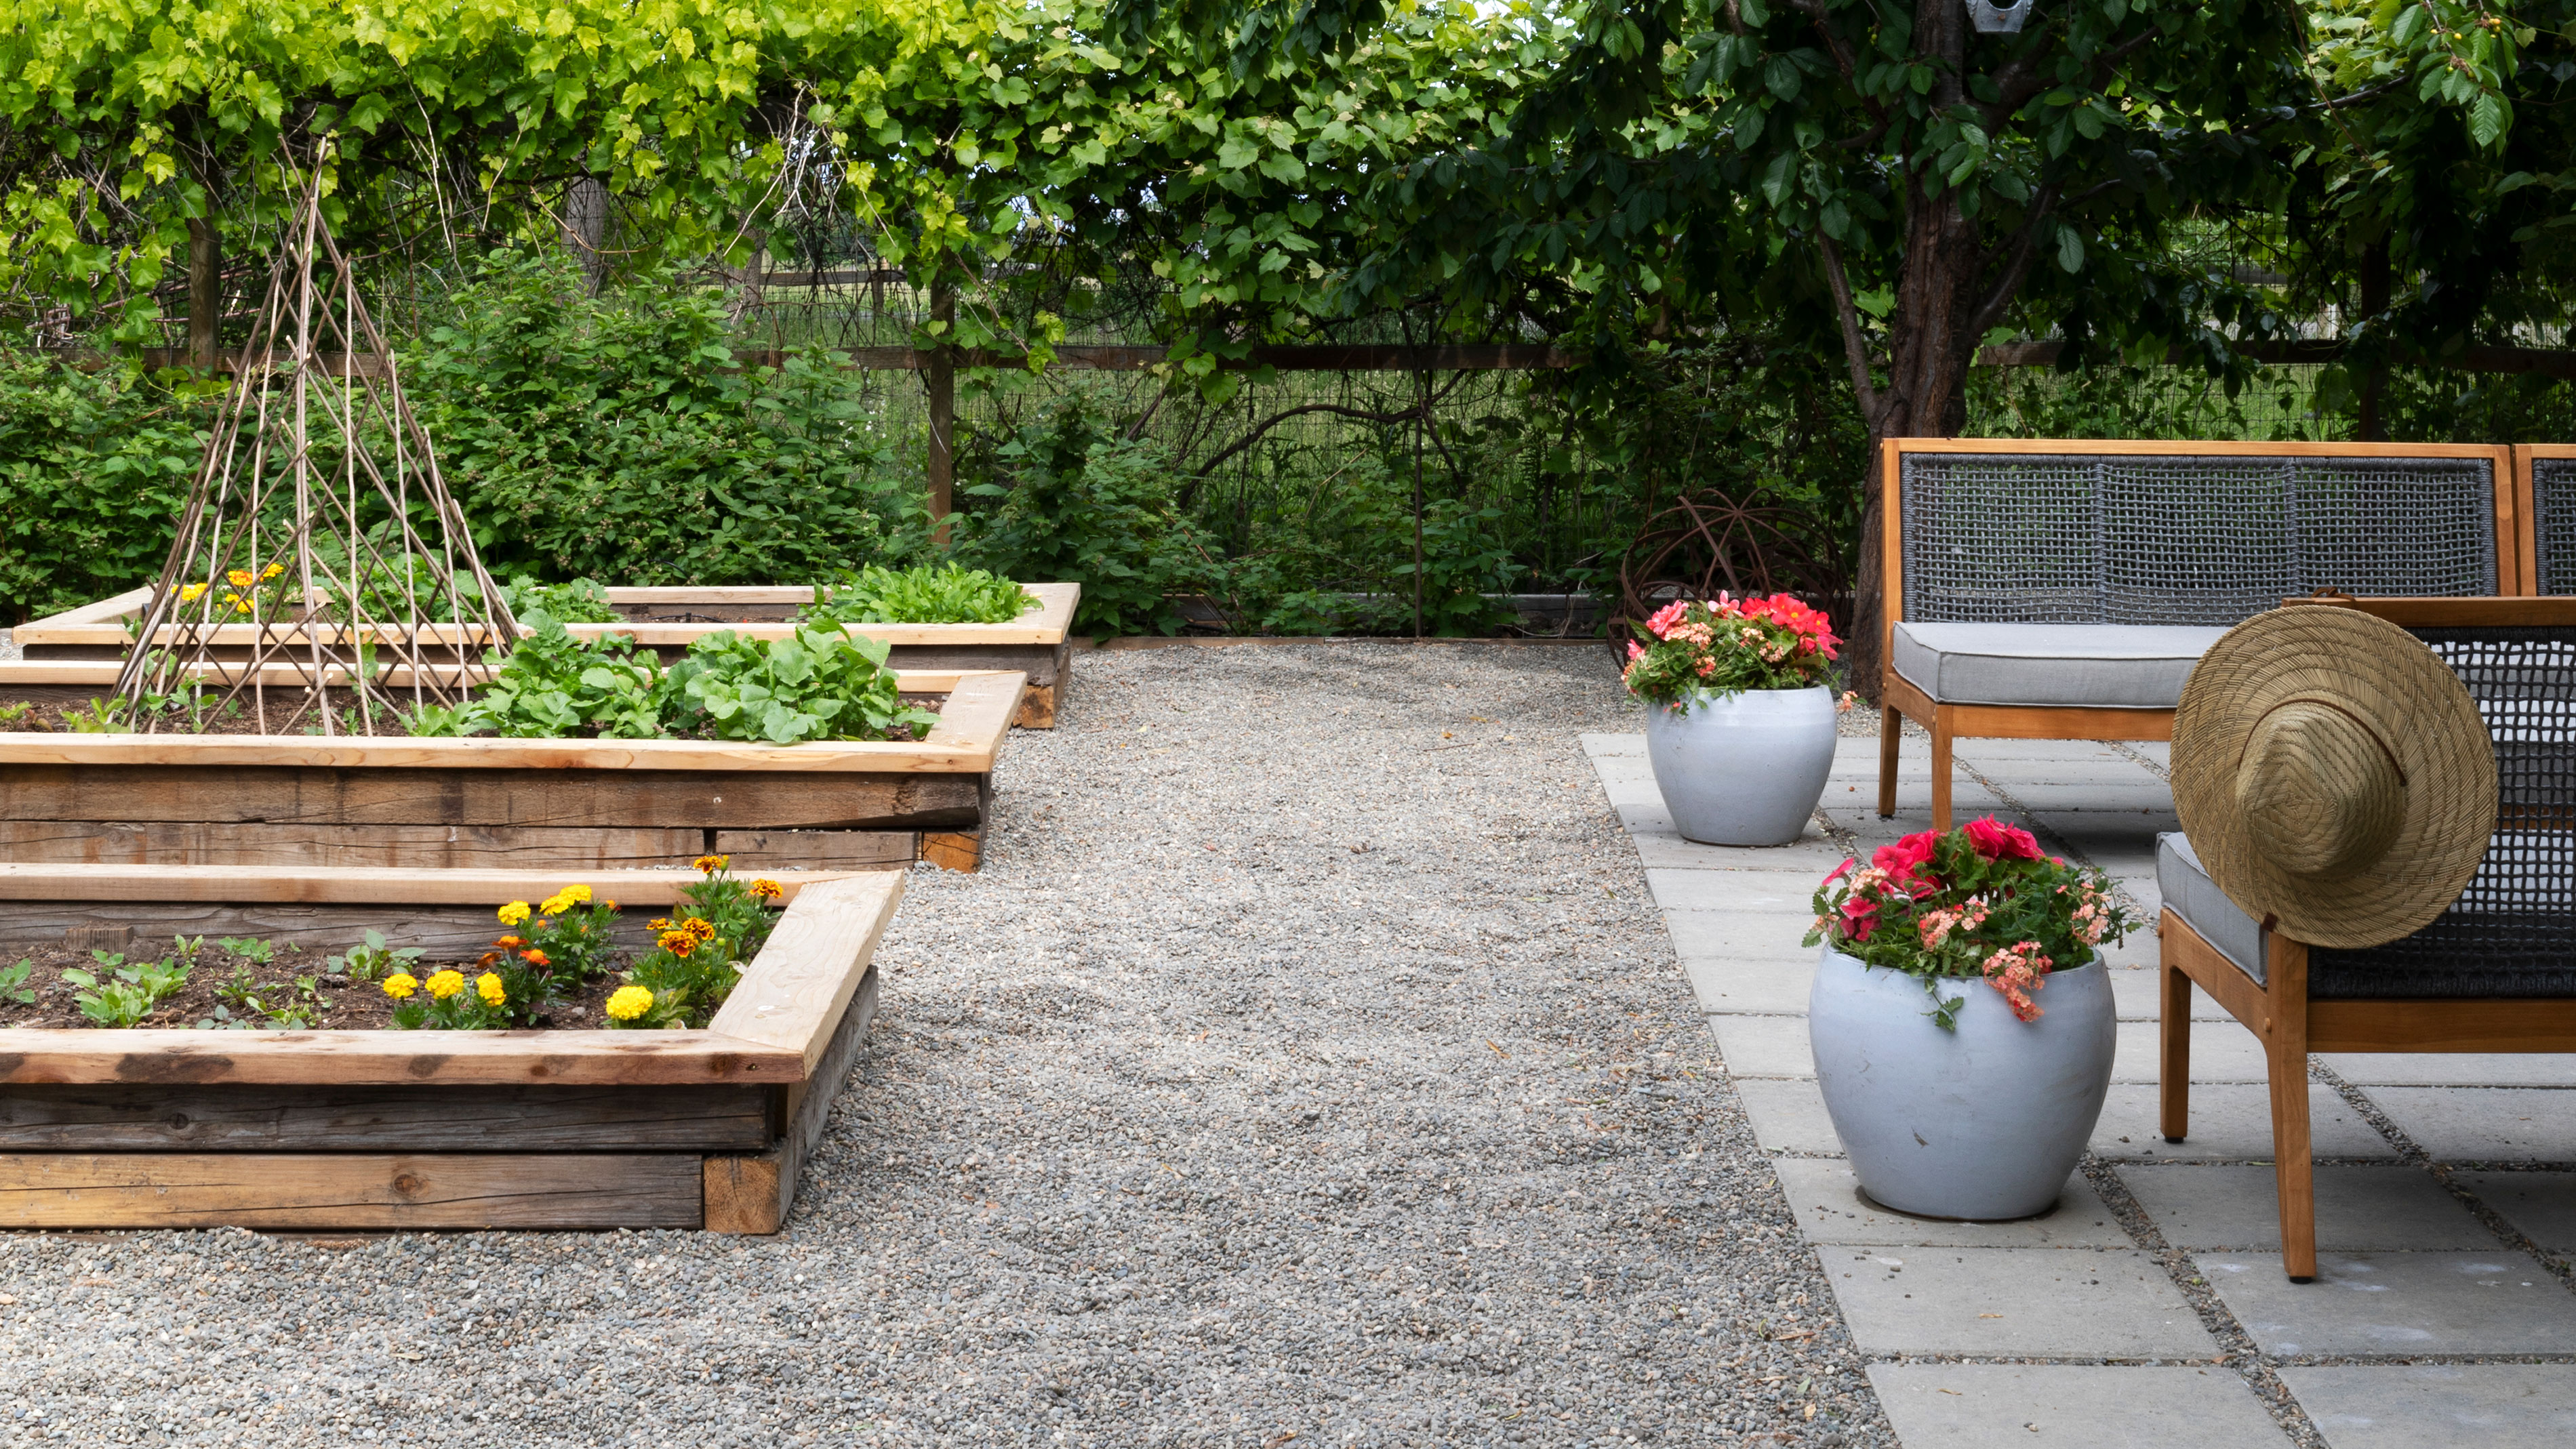 backyard ideas on a budget: create an outdoor retreat for less